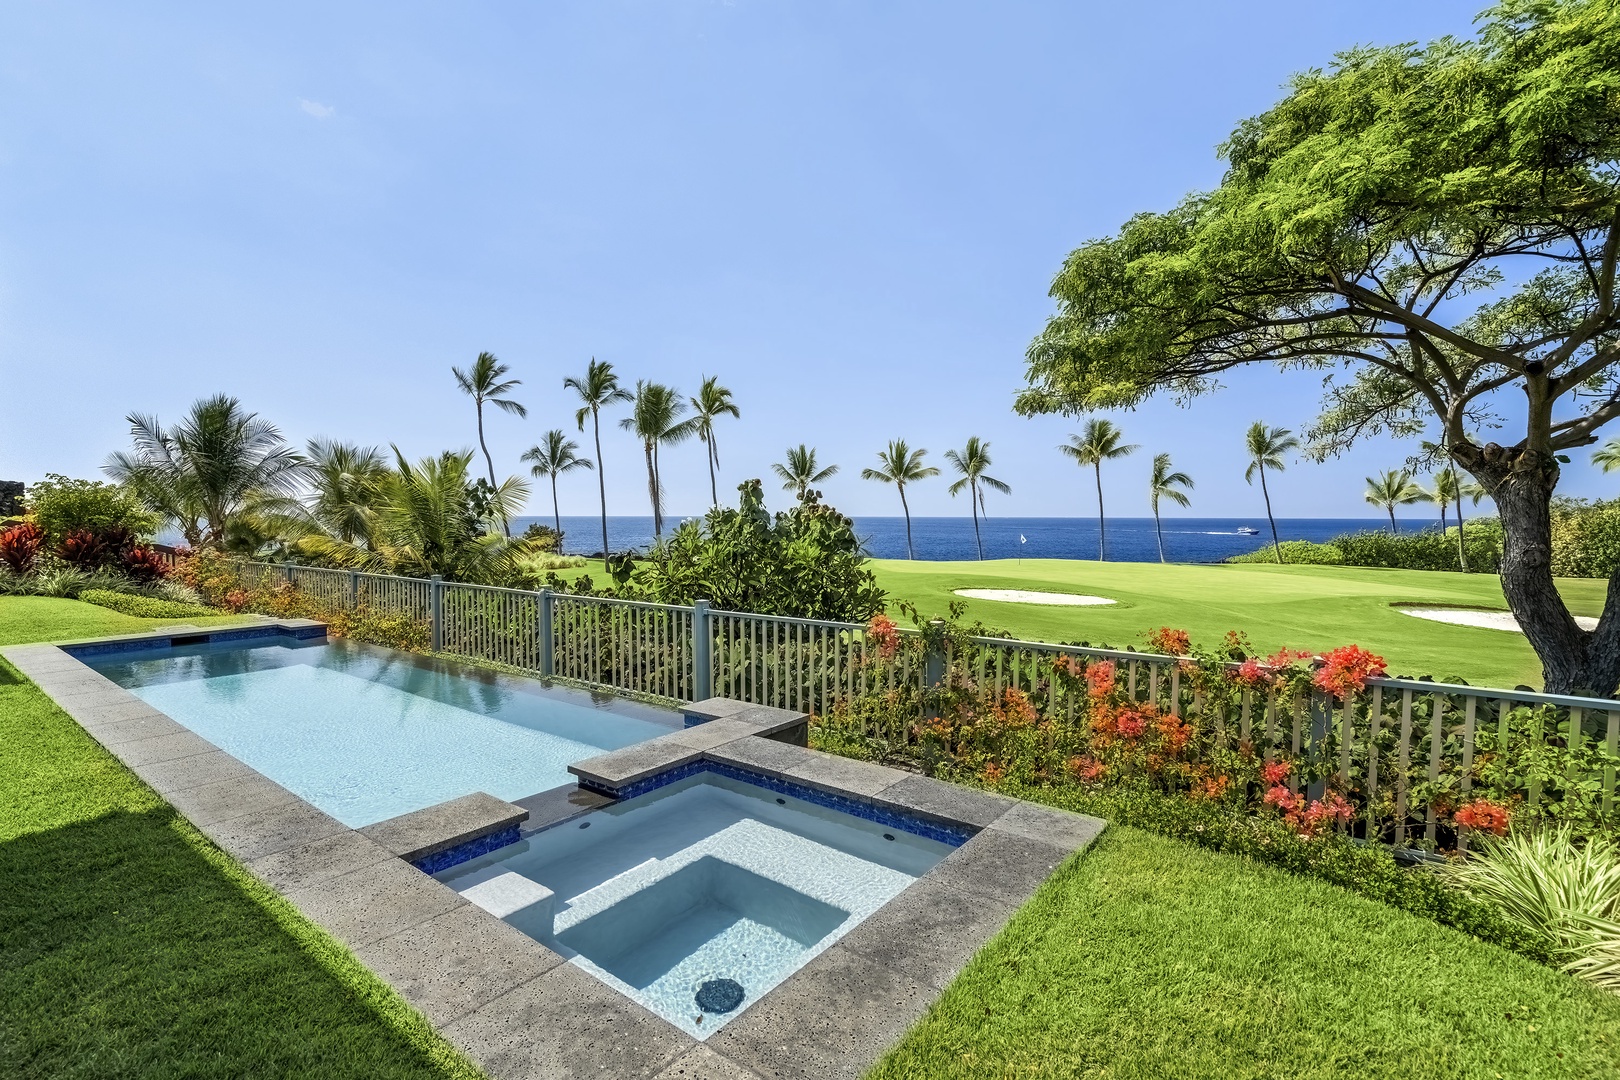 Kailua-Kona Vacation Rentals, Holua Kai #26 - Imagine your stress melt away in this perfect hot tub!